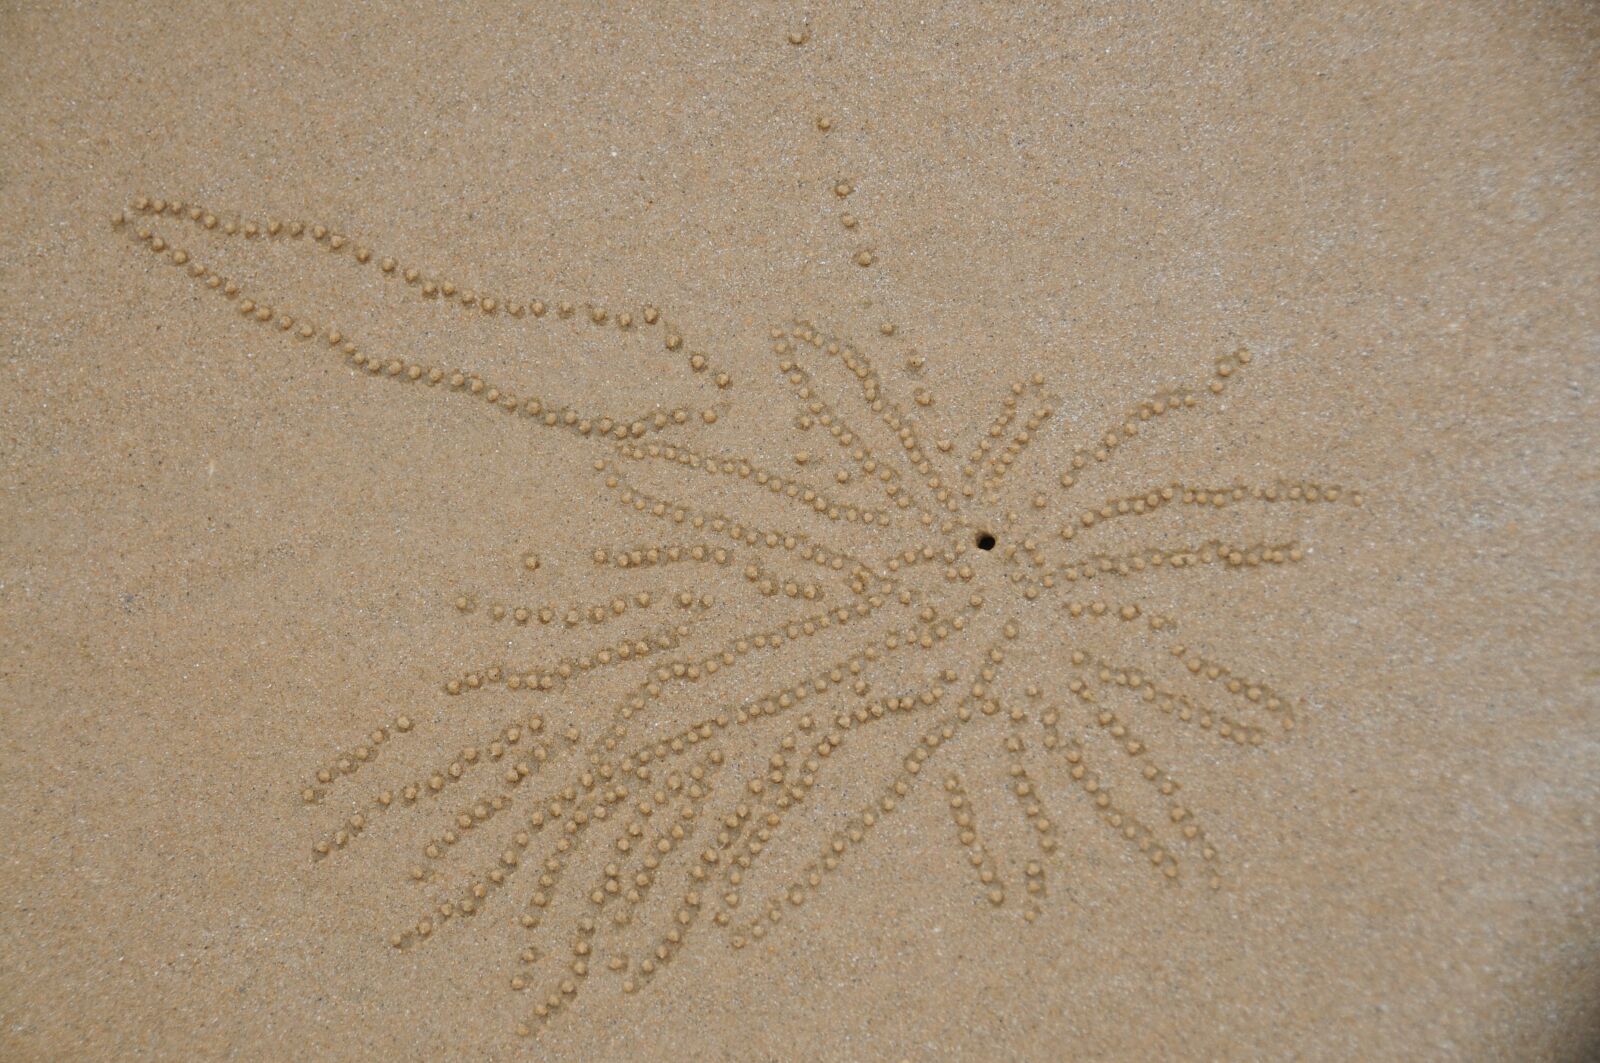 Nikon D300 sample photo. Sand, beach, nature photography